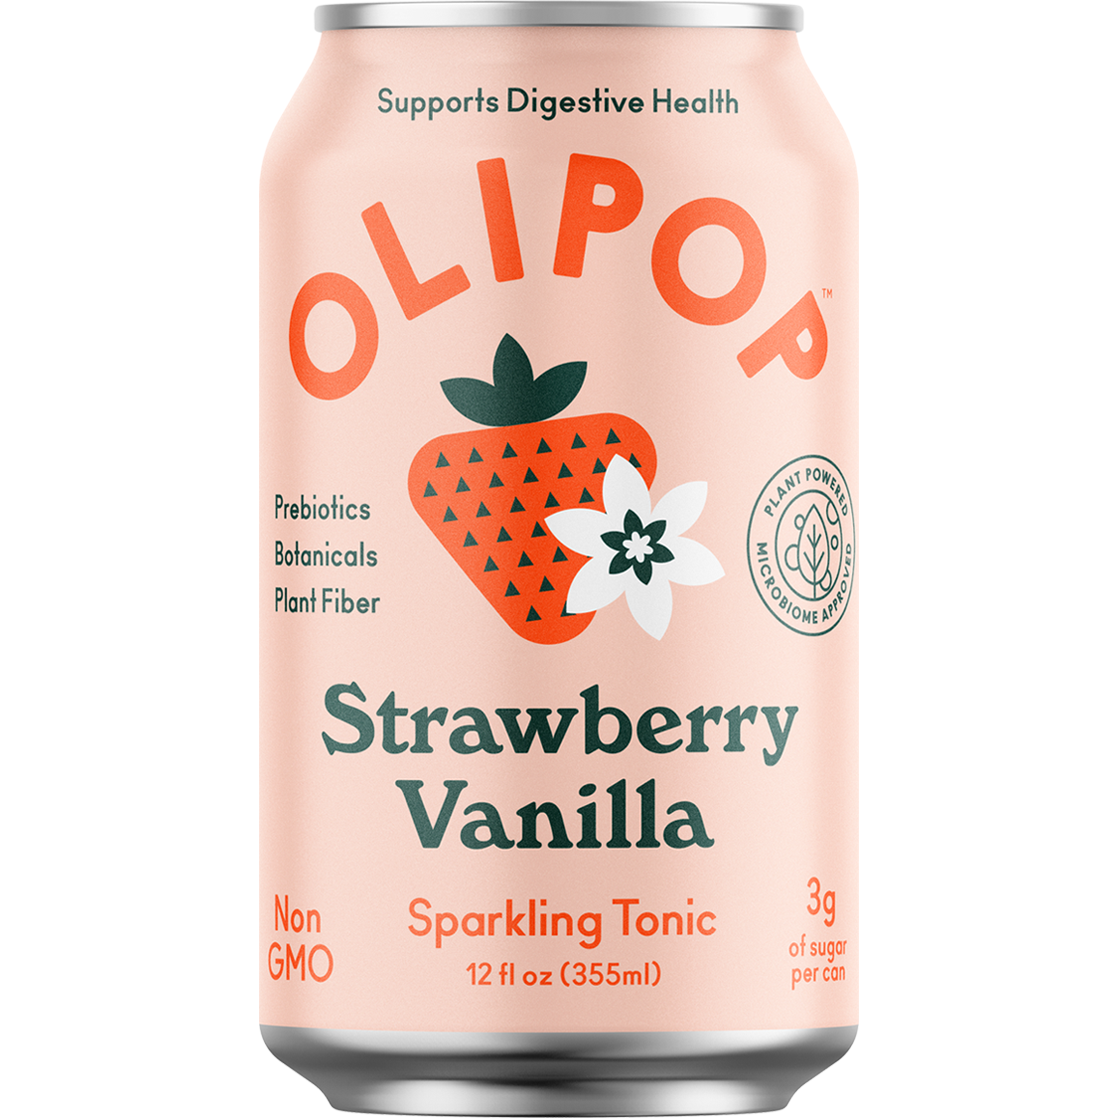 Olipop Prebiotic Sparkling Tonic Drink